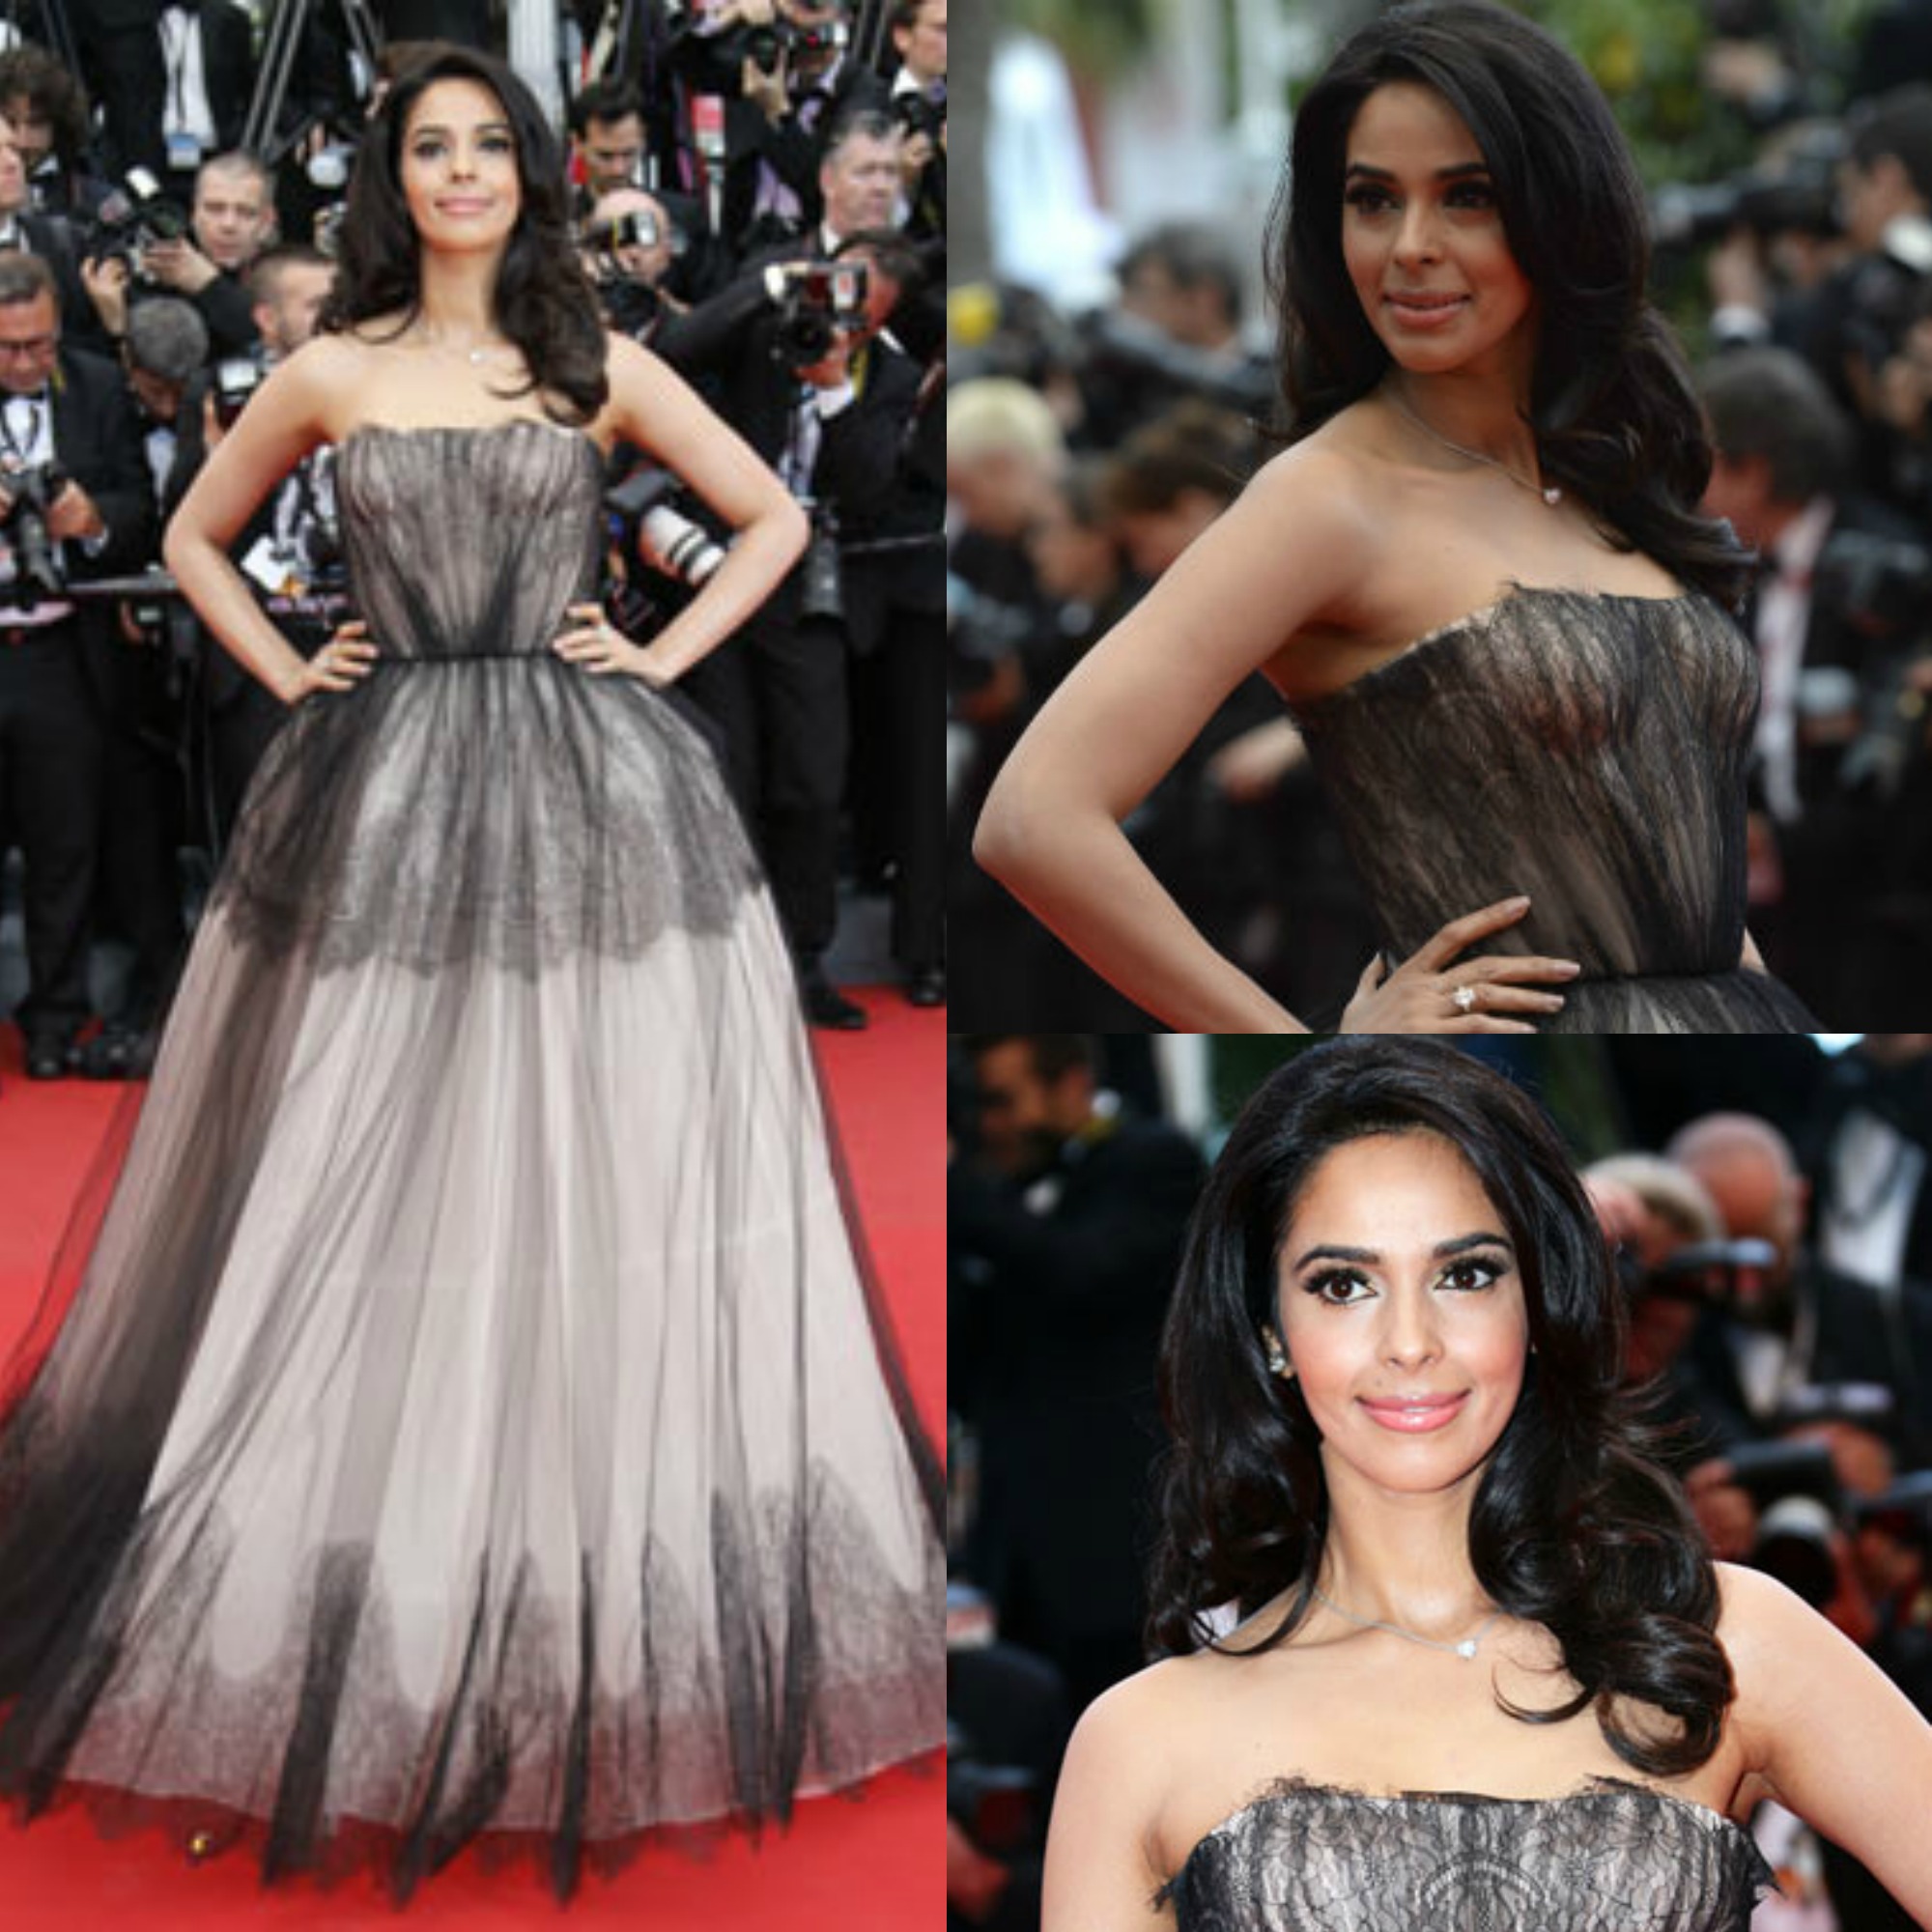 LXP - Lifexpe - Mallika Sherawat in Dolce and Gabbana at Cannes DG luxury gala dress